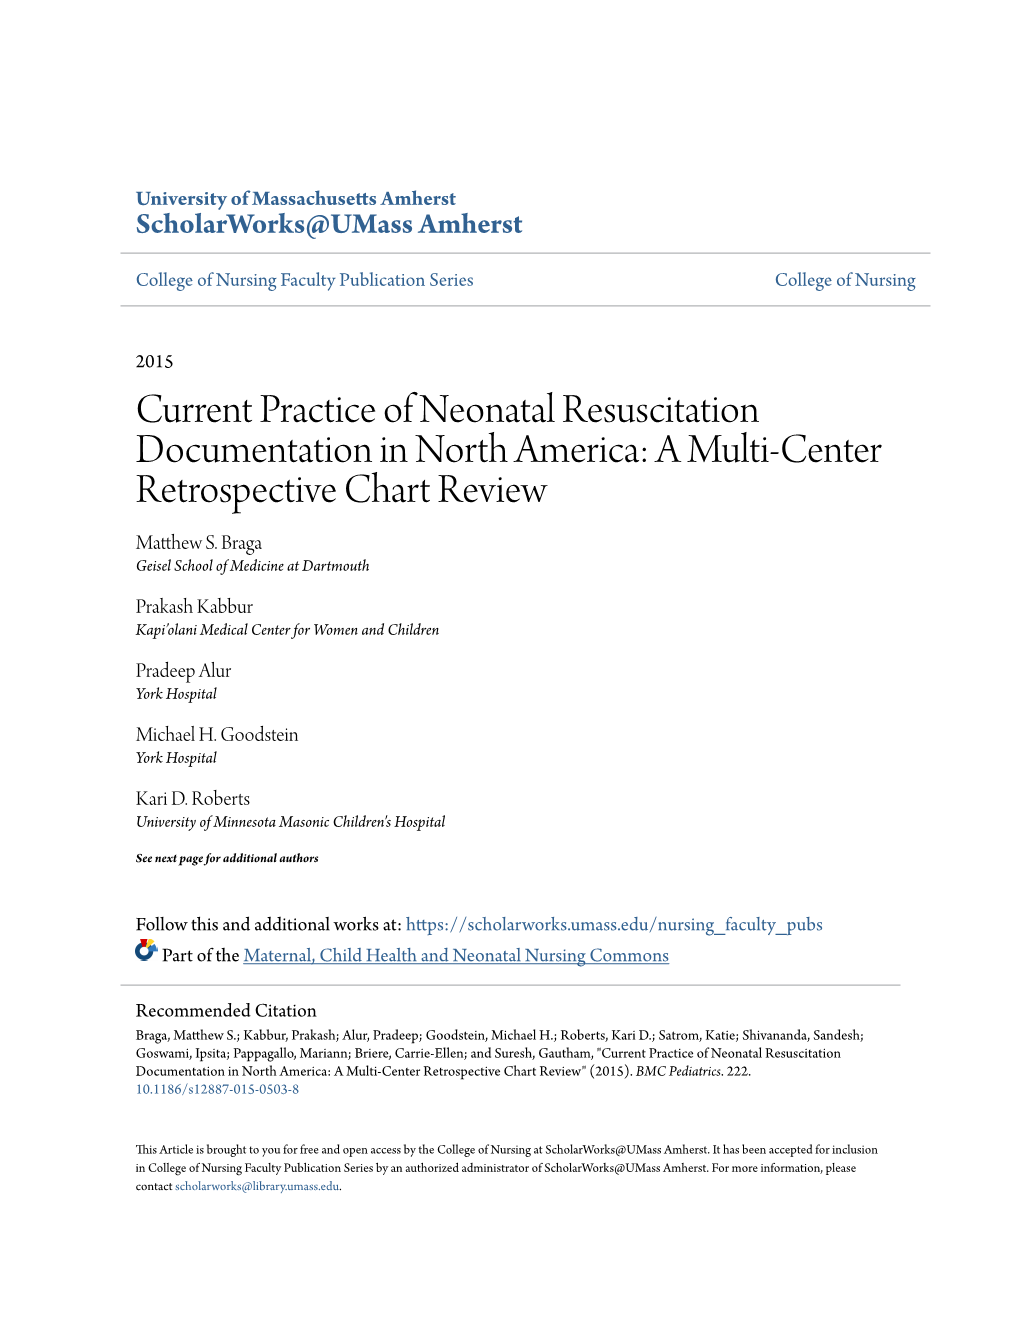 Current Practice of Neonatal Resuscitation Documentation In